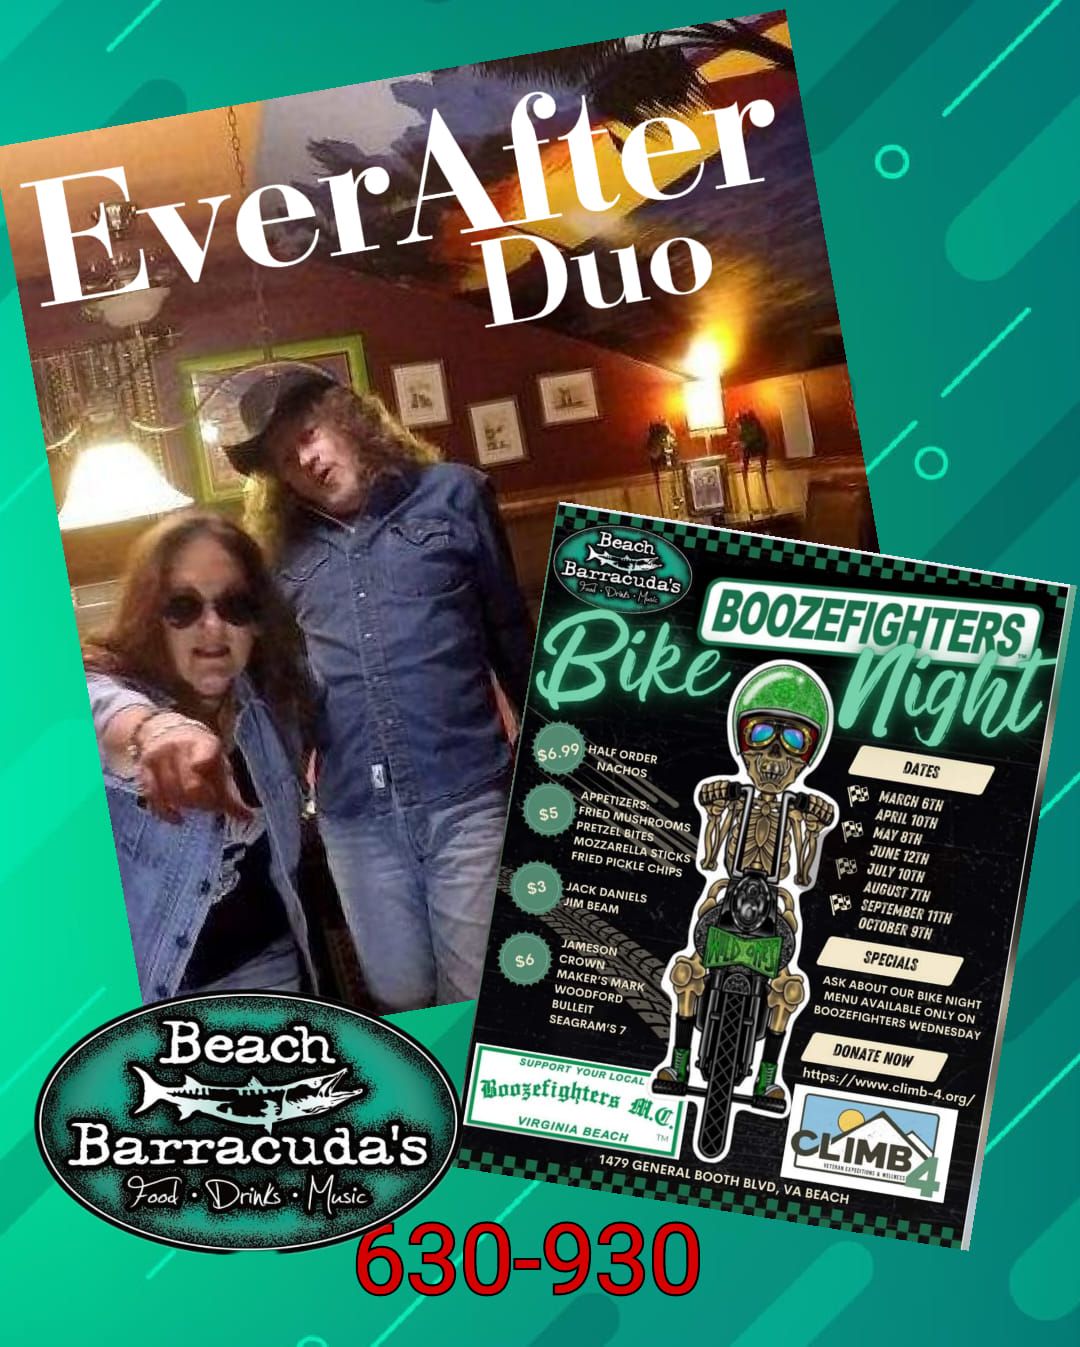 EverAfter Duo at Beach Barracudas Bike Night!